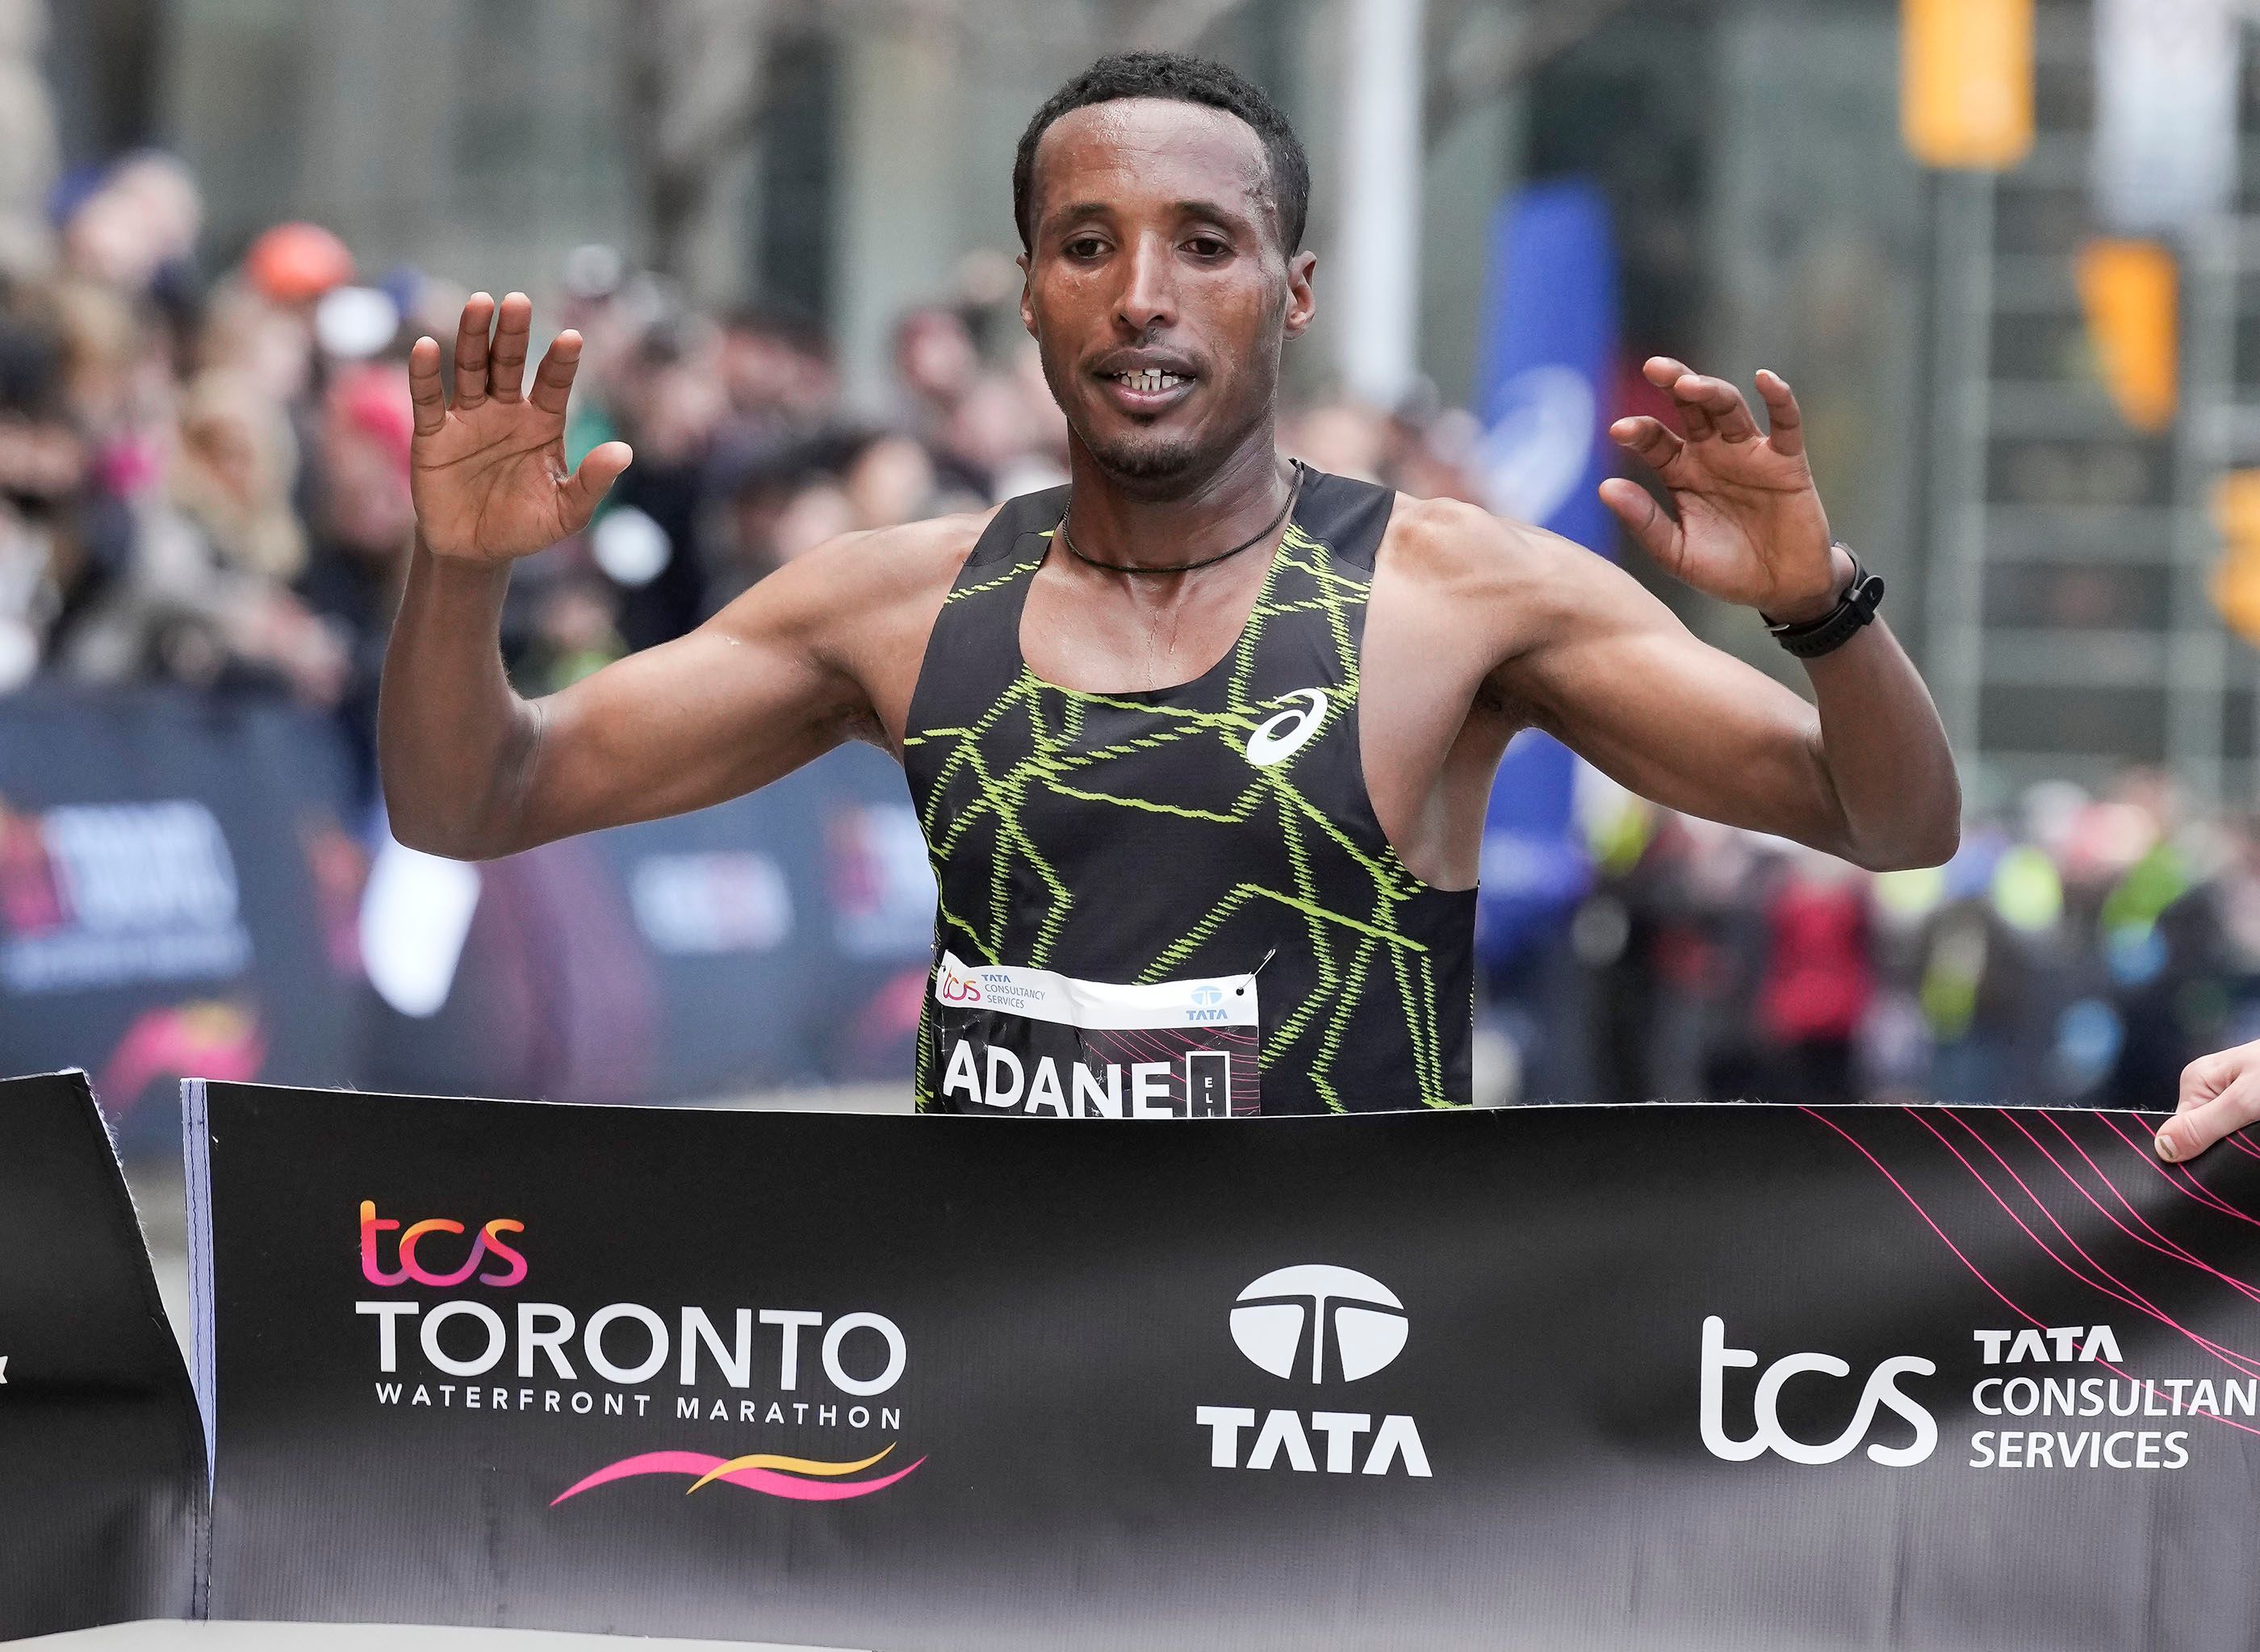 Yihunilign Adane wins the Toronto Waterfront Marathon